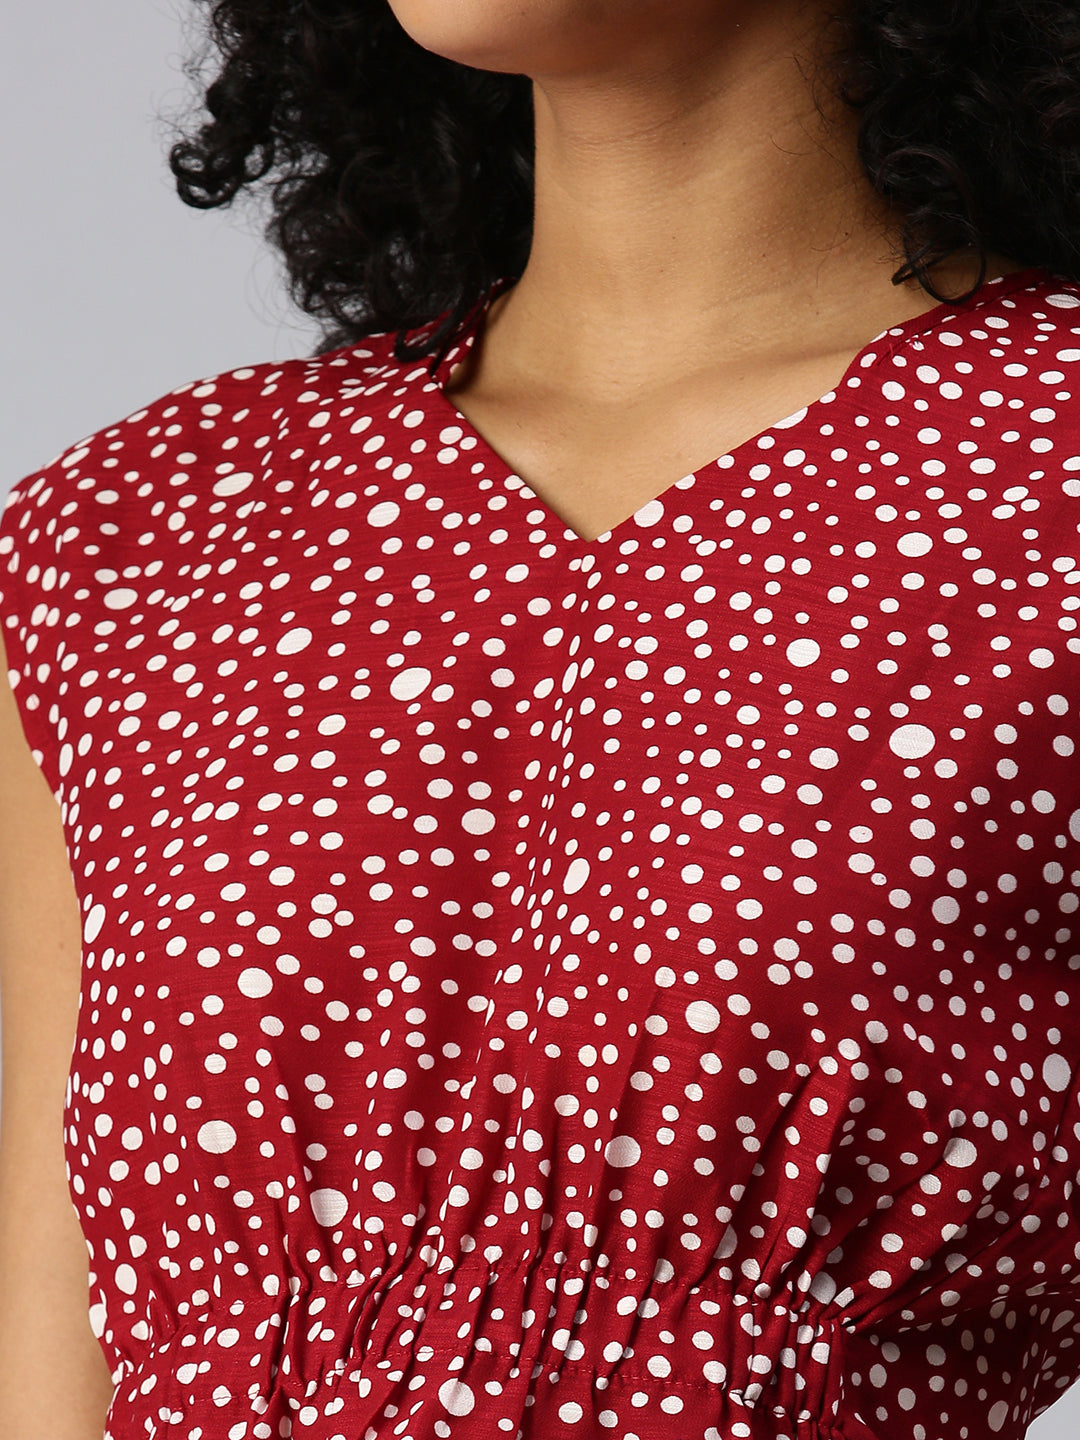 Women's Red Polka Dots Top